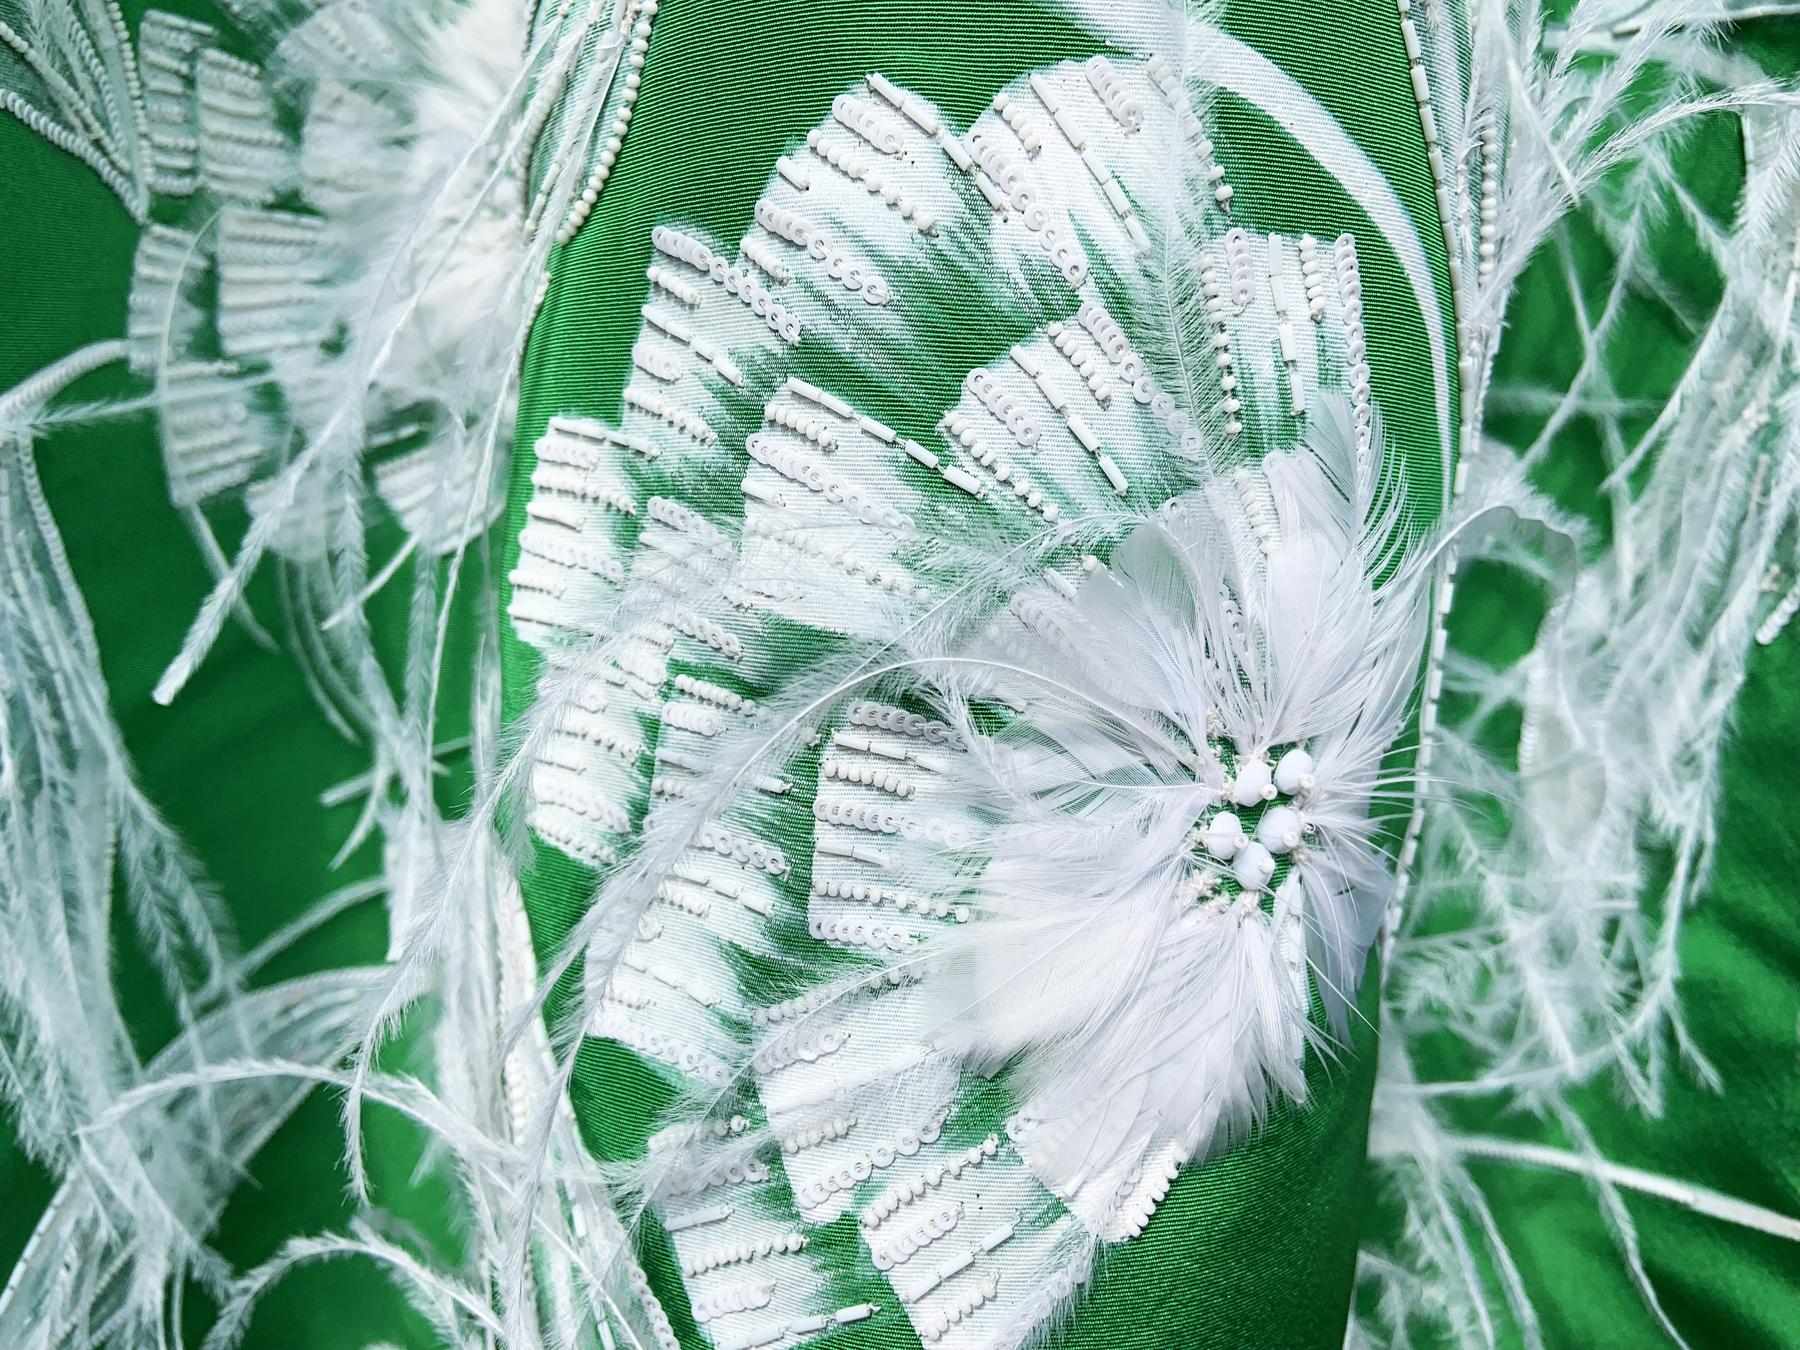 NWT Oscar de la Renta $5490 S/S 2015 Green Silk Taffeta Feather Beads Dress US 6 For Sale 4